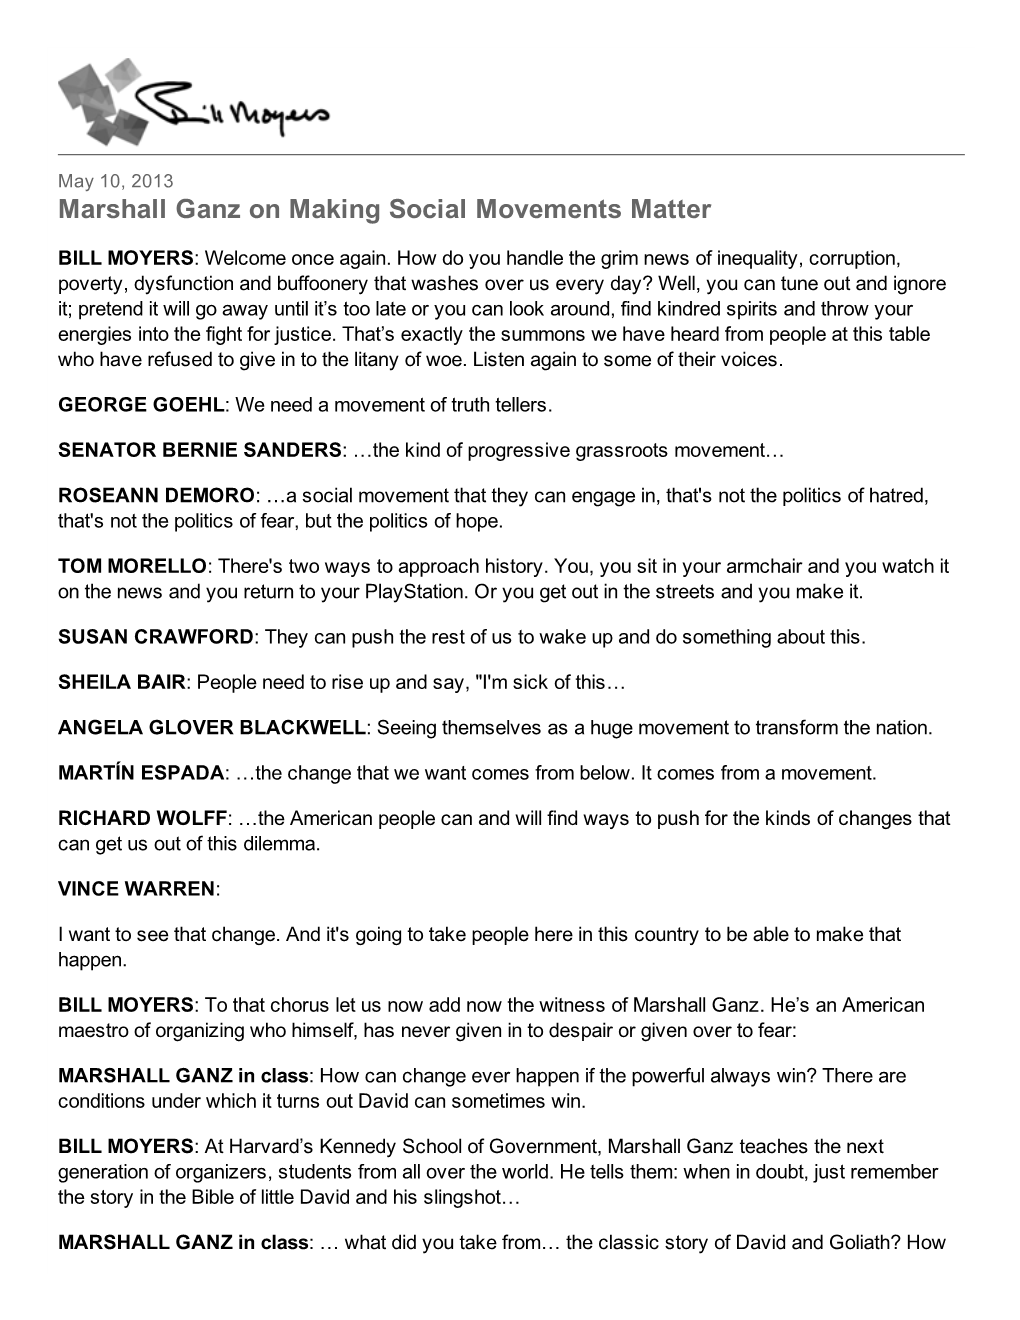 Marshall Ganz on Making Social Movements Matter